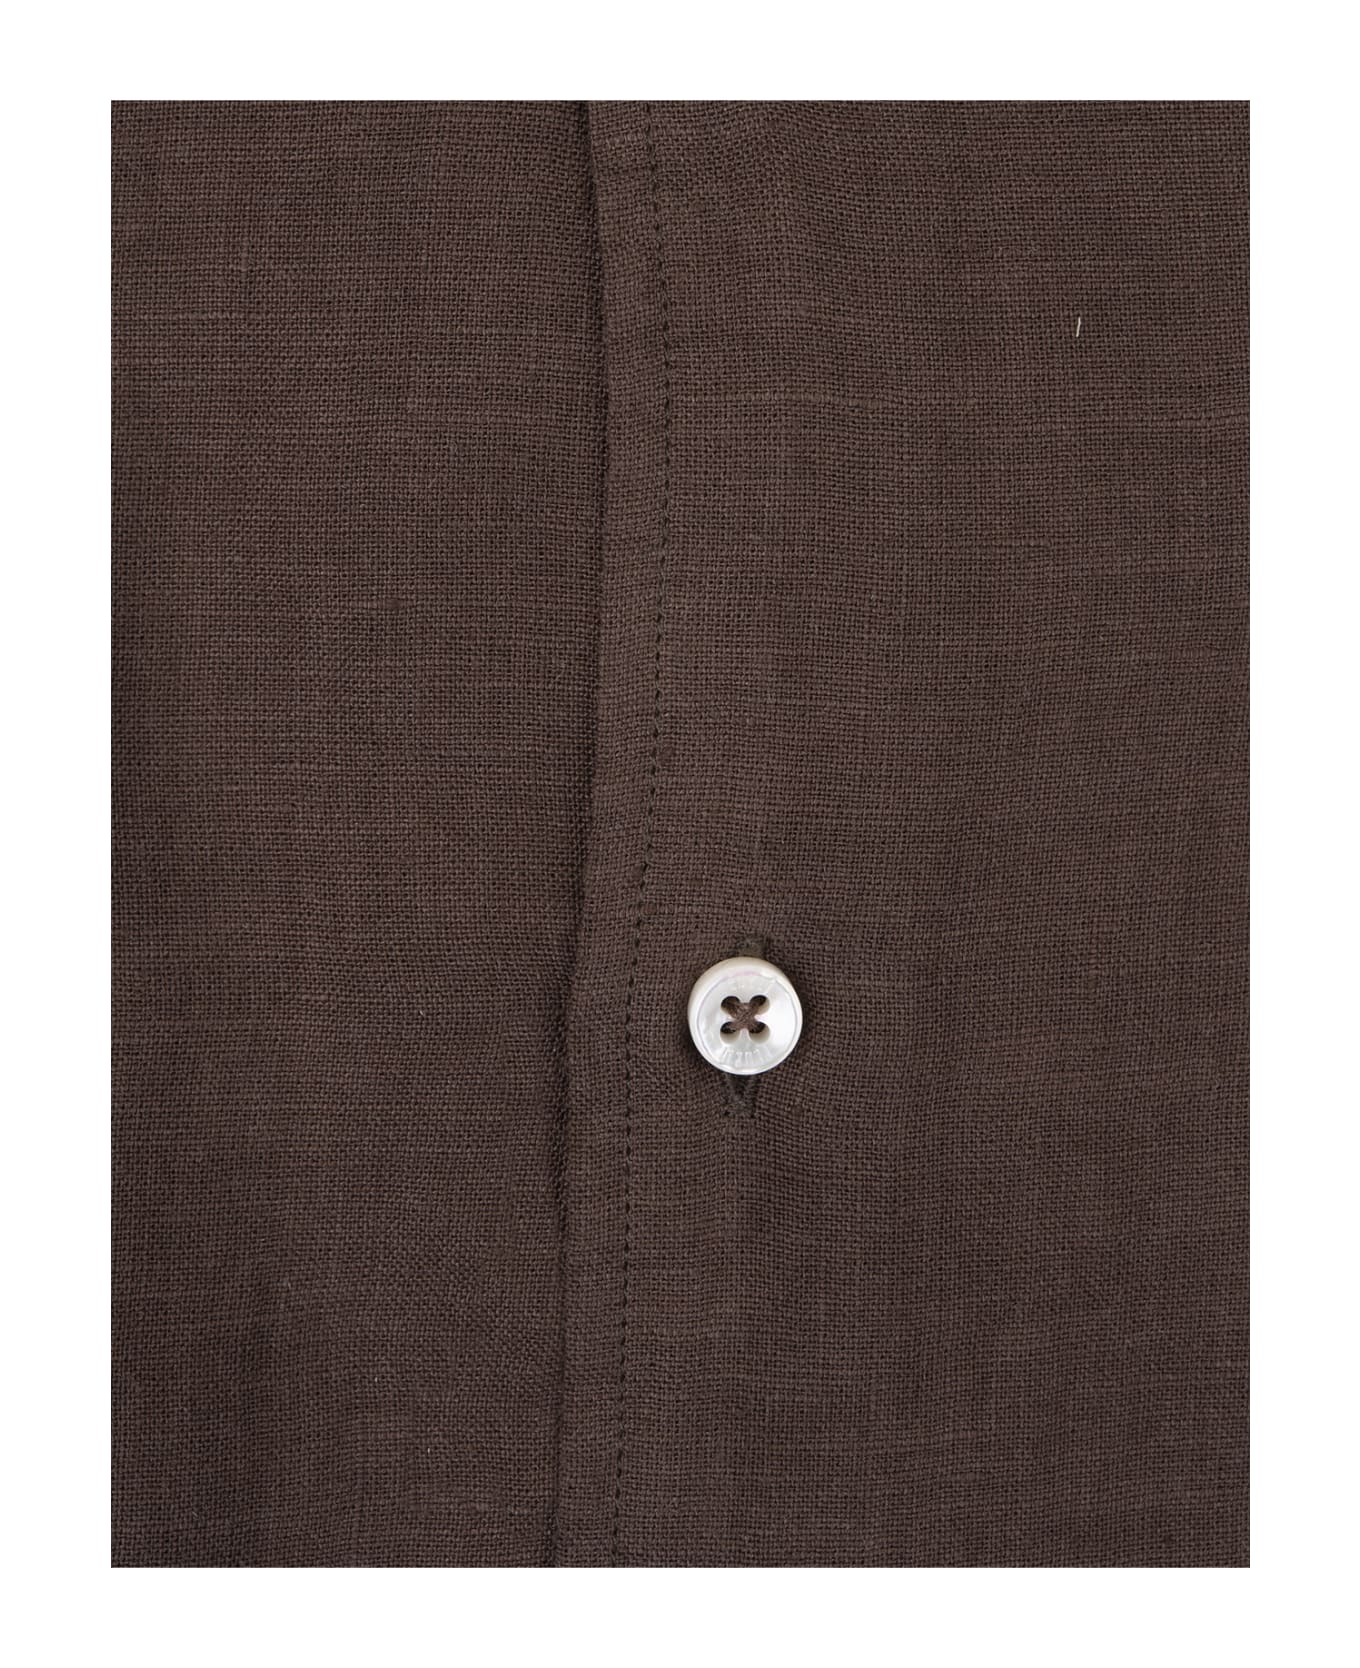 Fedeli Nick Shirt In Brown Linen - Brown